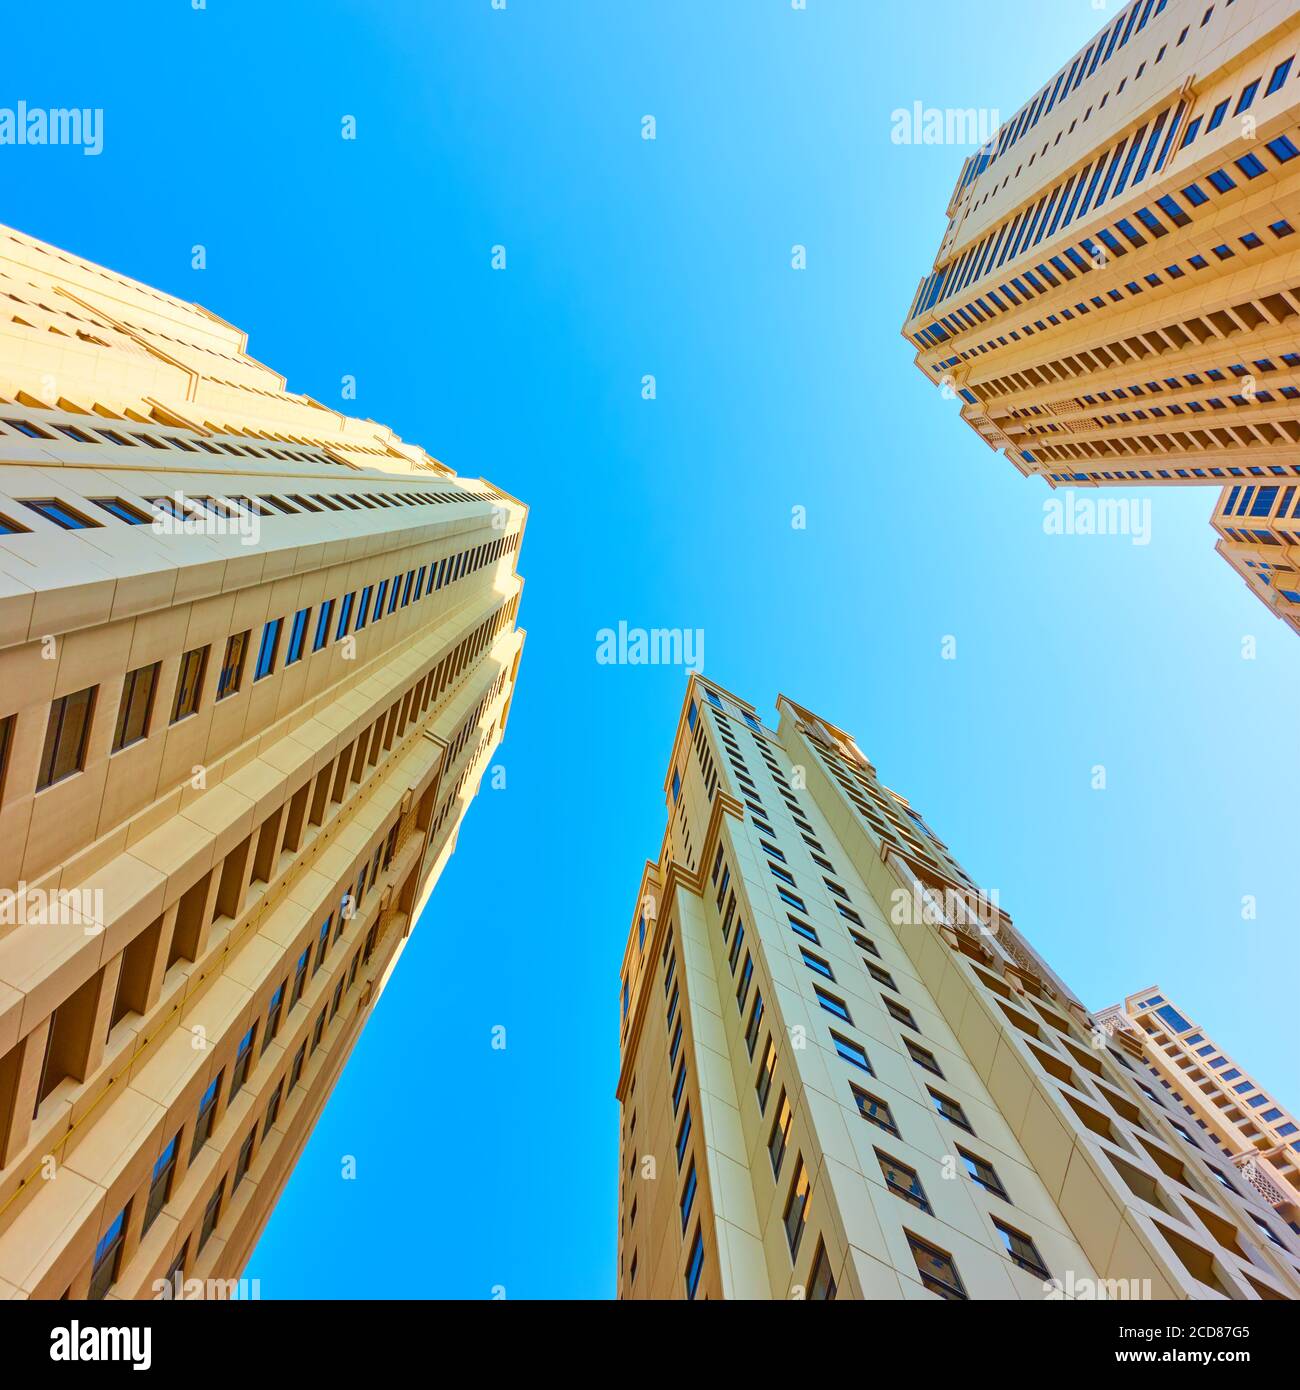 Mehrstöckige Wohngebäude am blauen Himmel, Dubai, VAE. Stockfoto